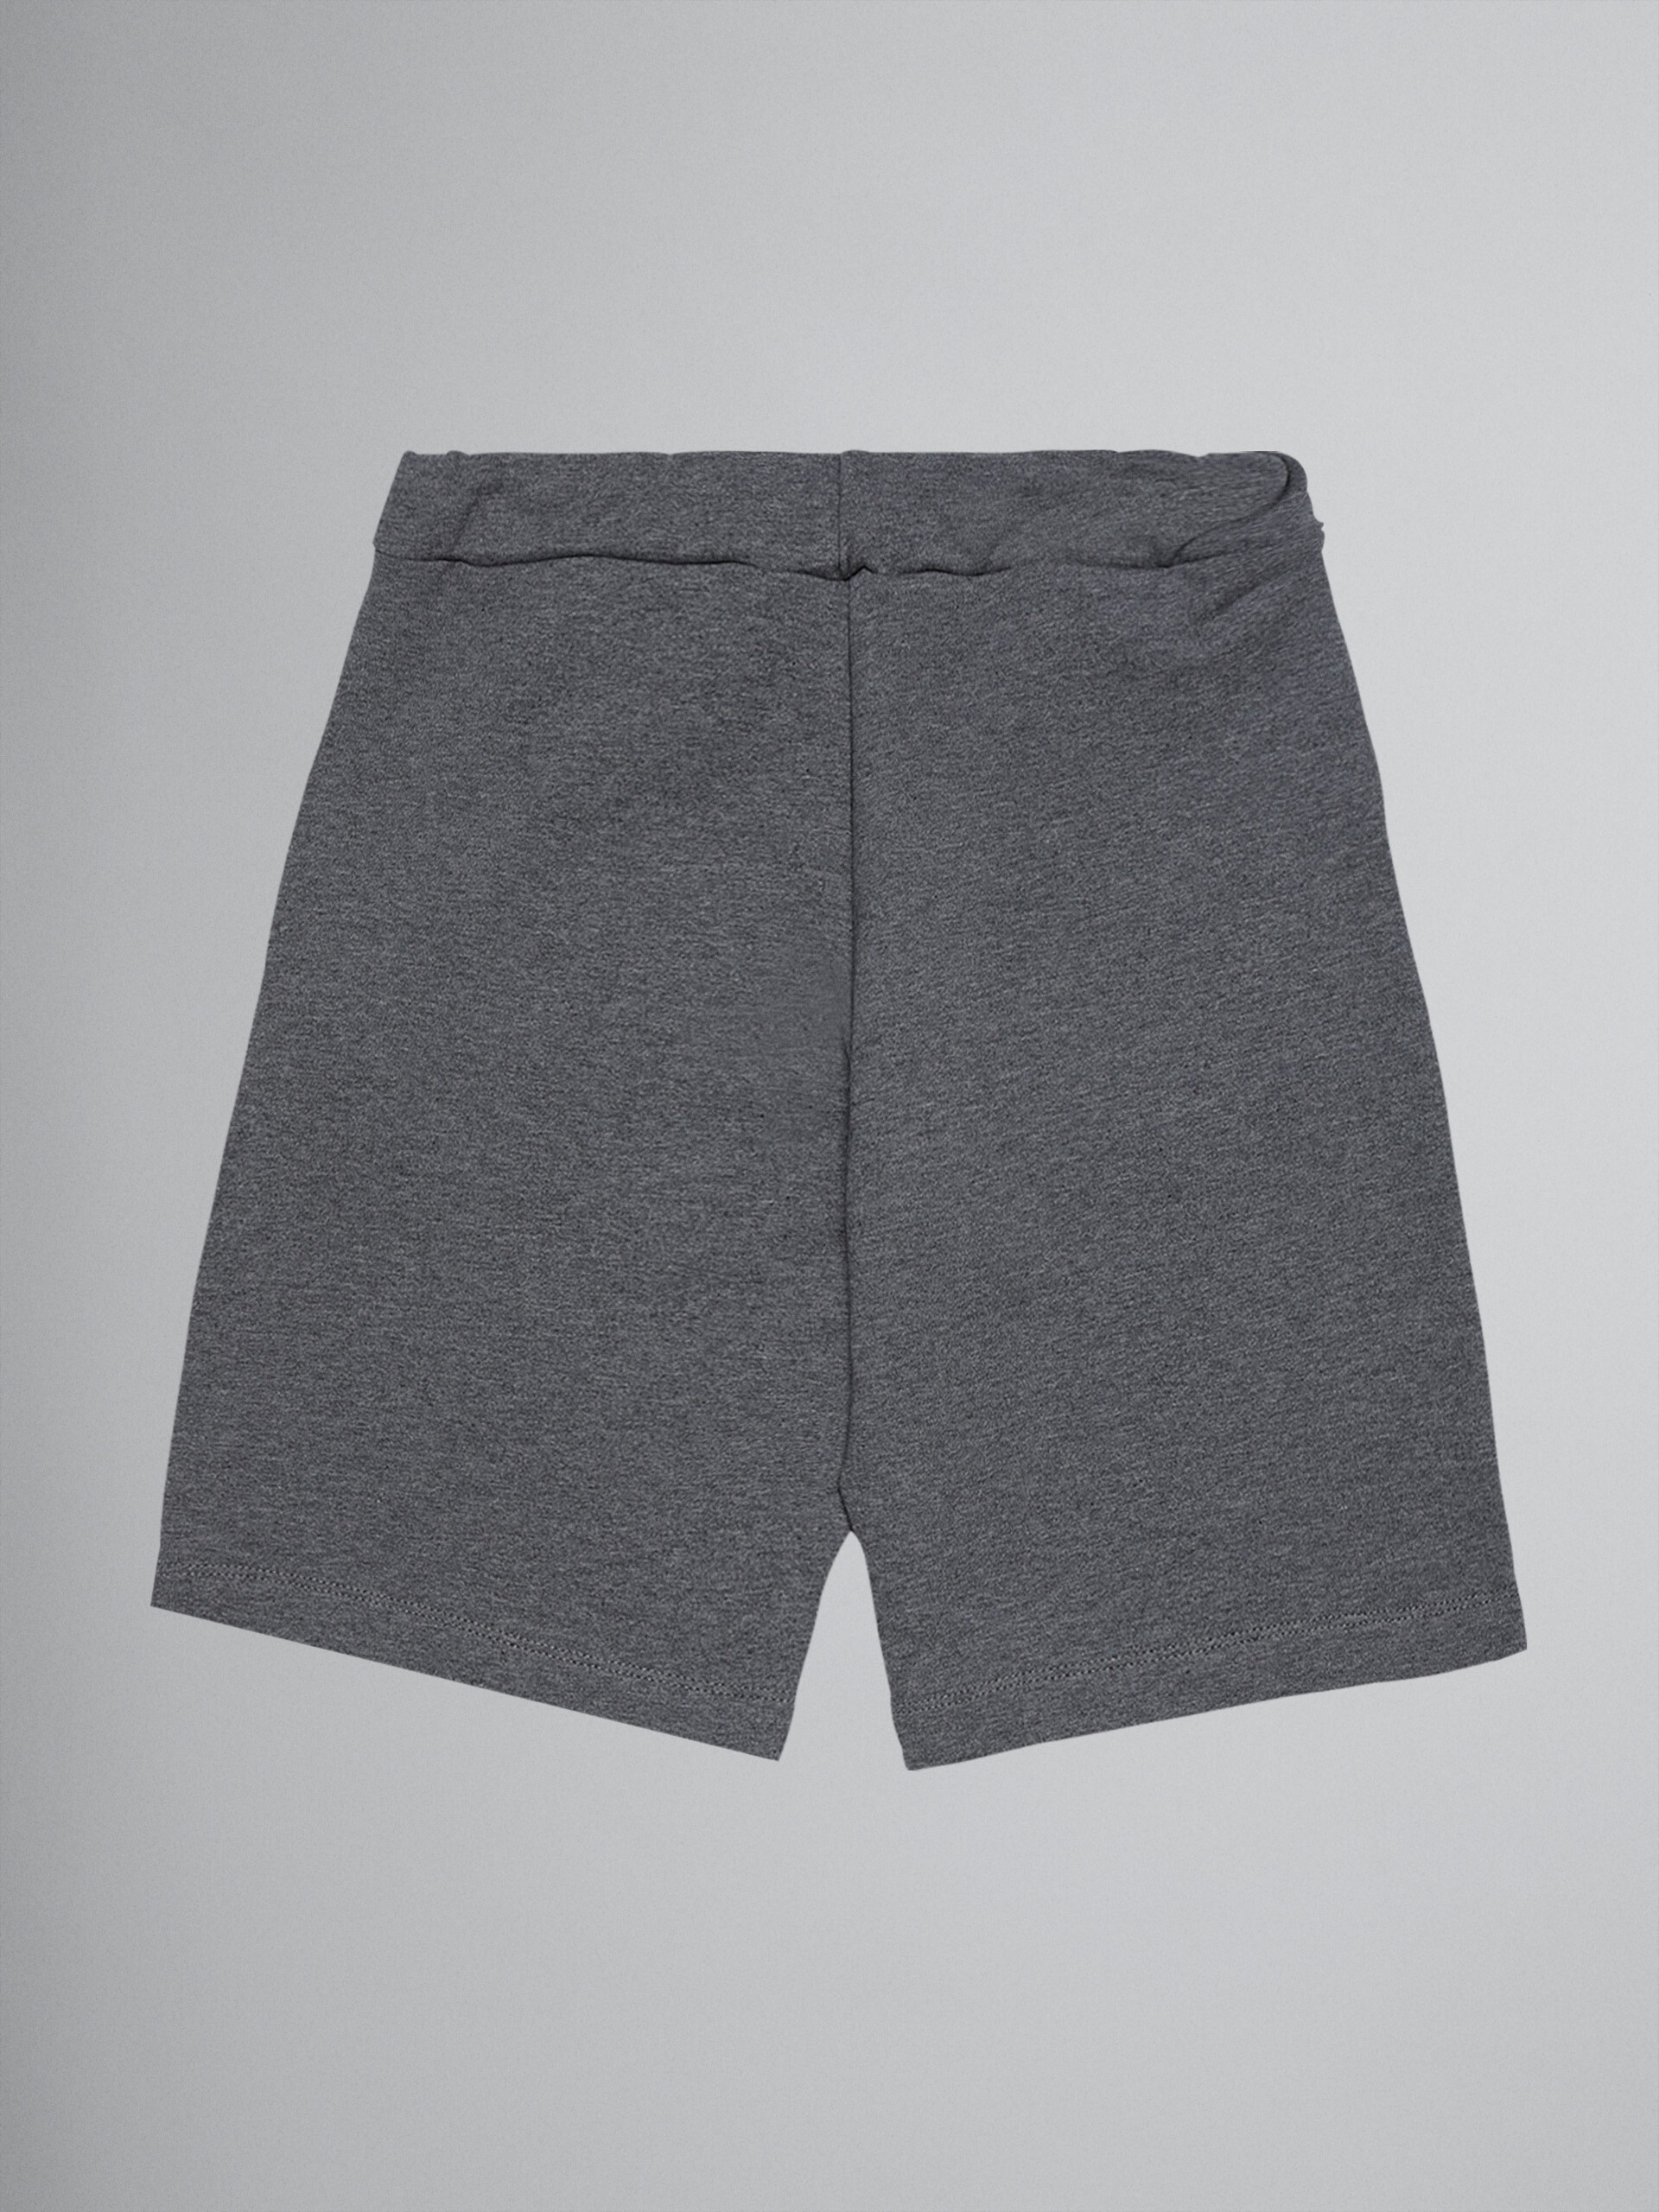 Pantalón de jogging corto de mezcla algodón - Pantalones - Image 2